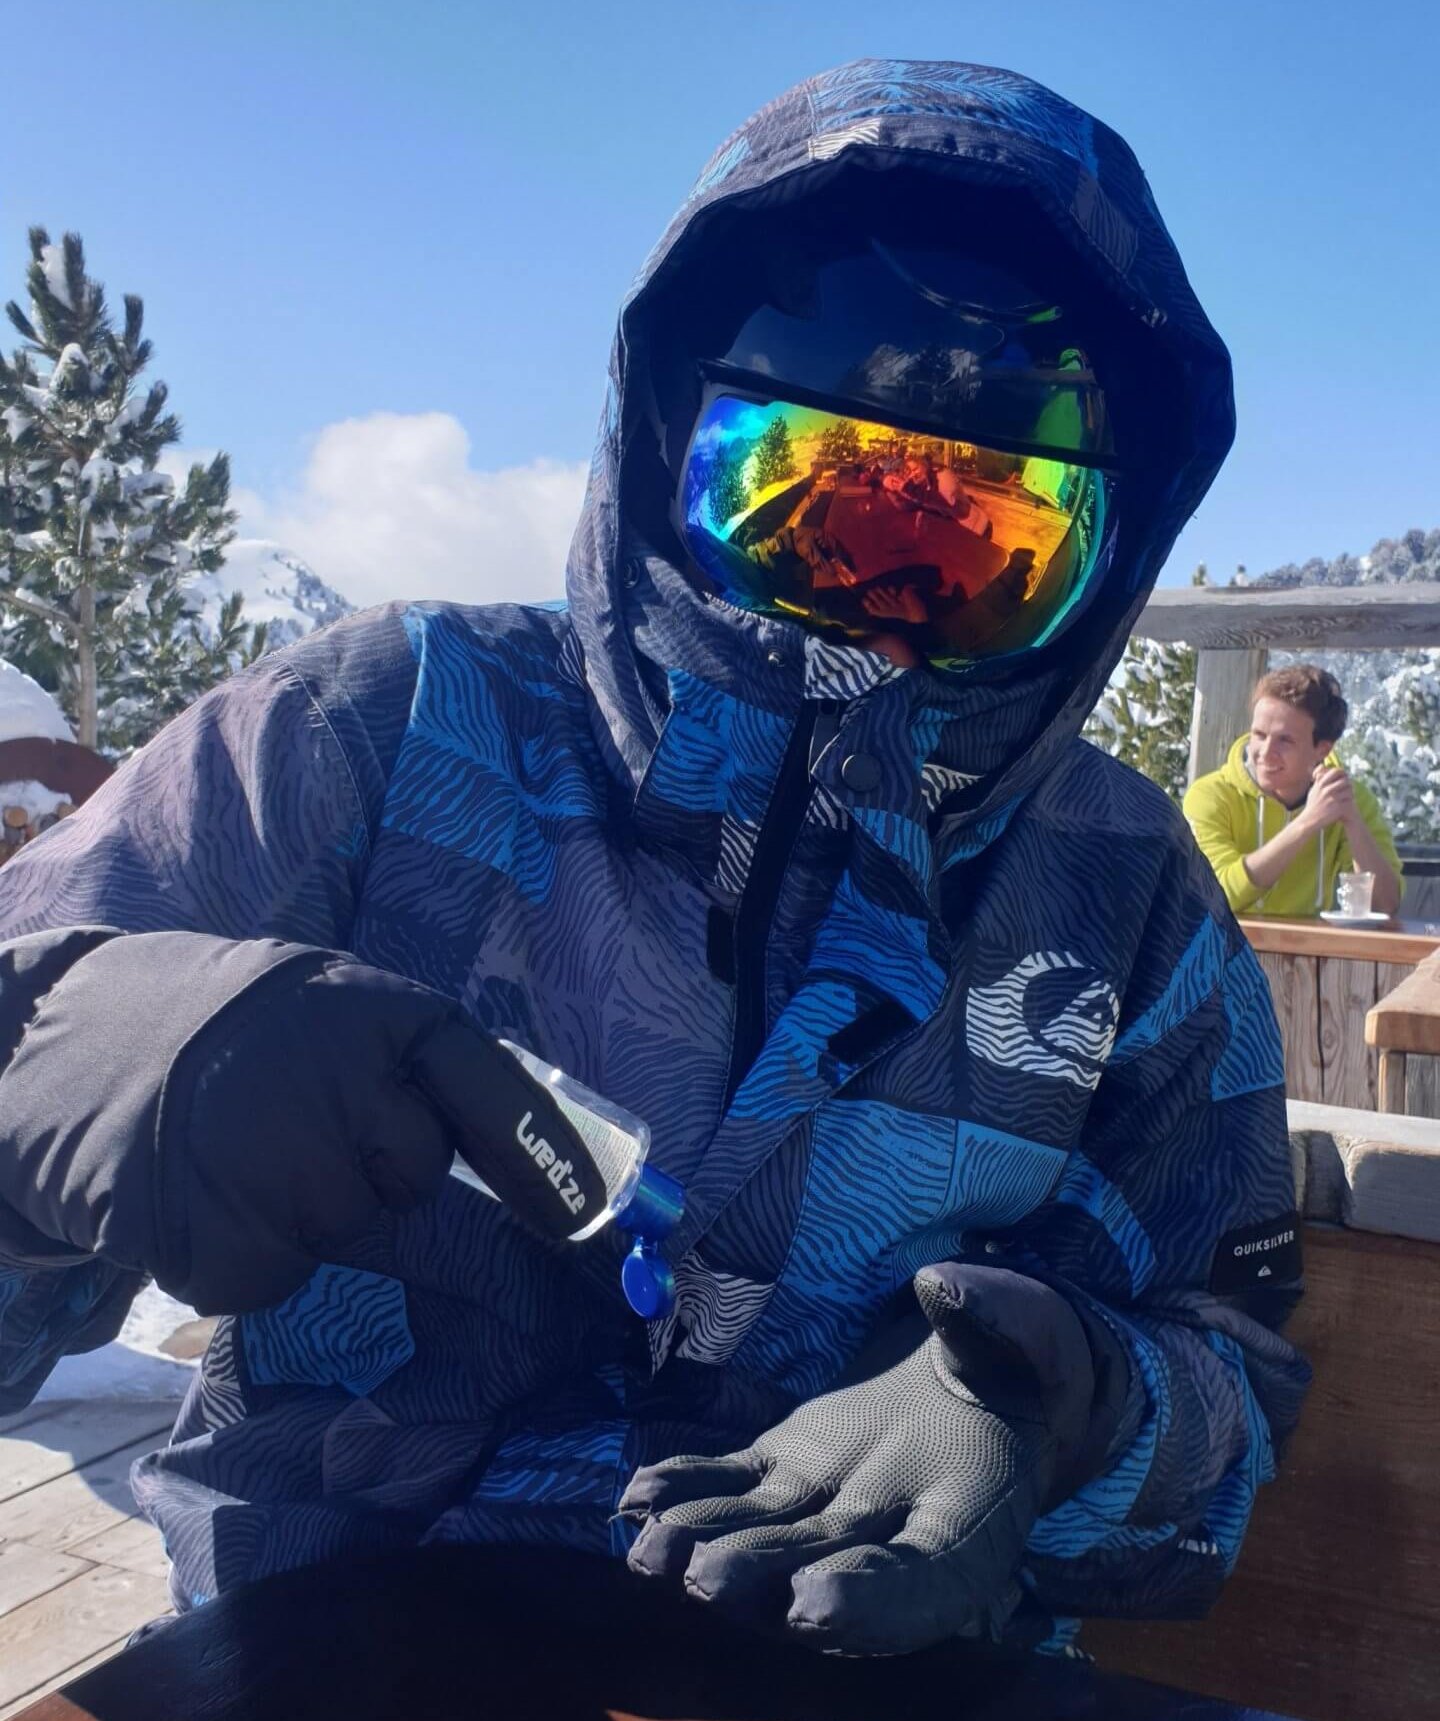 man squeezing hand gel in full ski gear fighting against coronavirus in italy